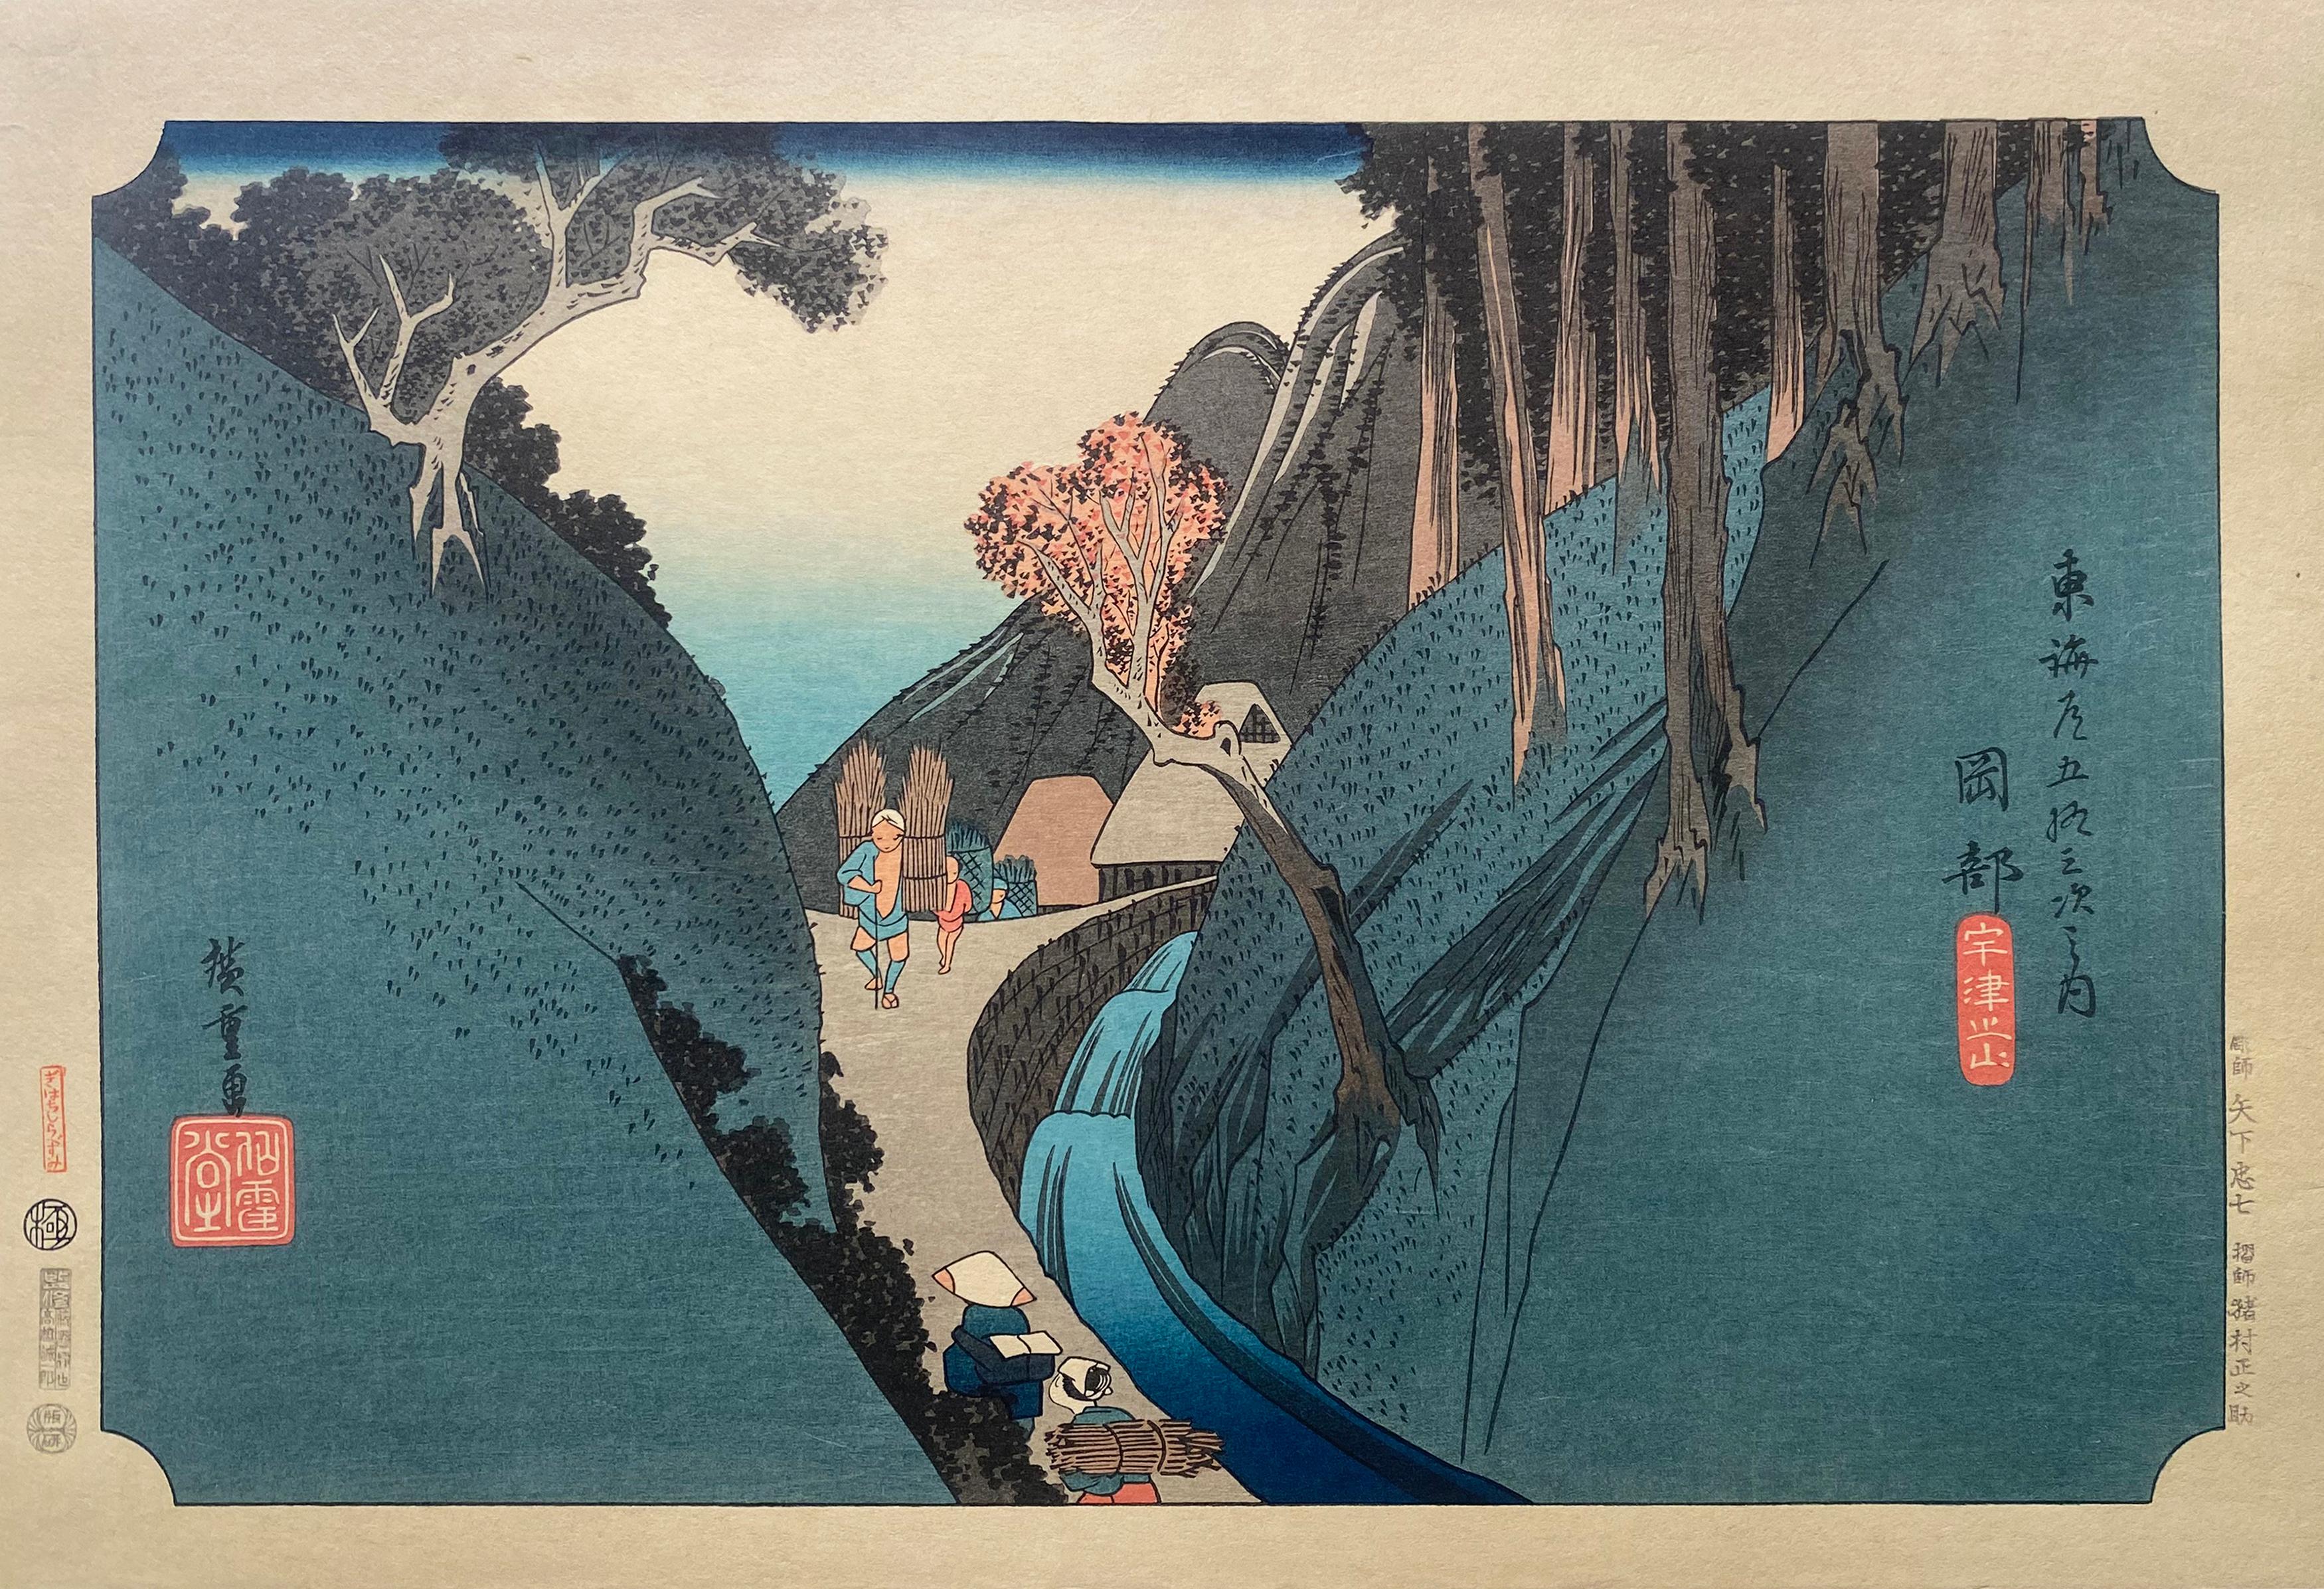 Utagawa Hiroshige (Ando Hiroshige) Landscape Print - 'View of Okabe', After Utagawa Hiroshige 歌川廣重, Ukiyo-e Woodblock, Tokaido